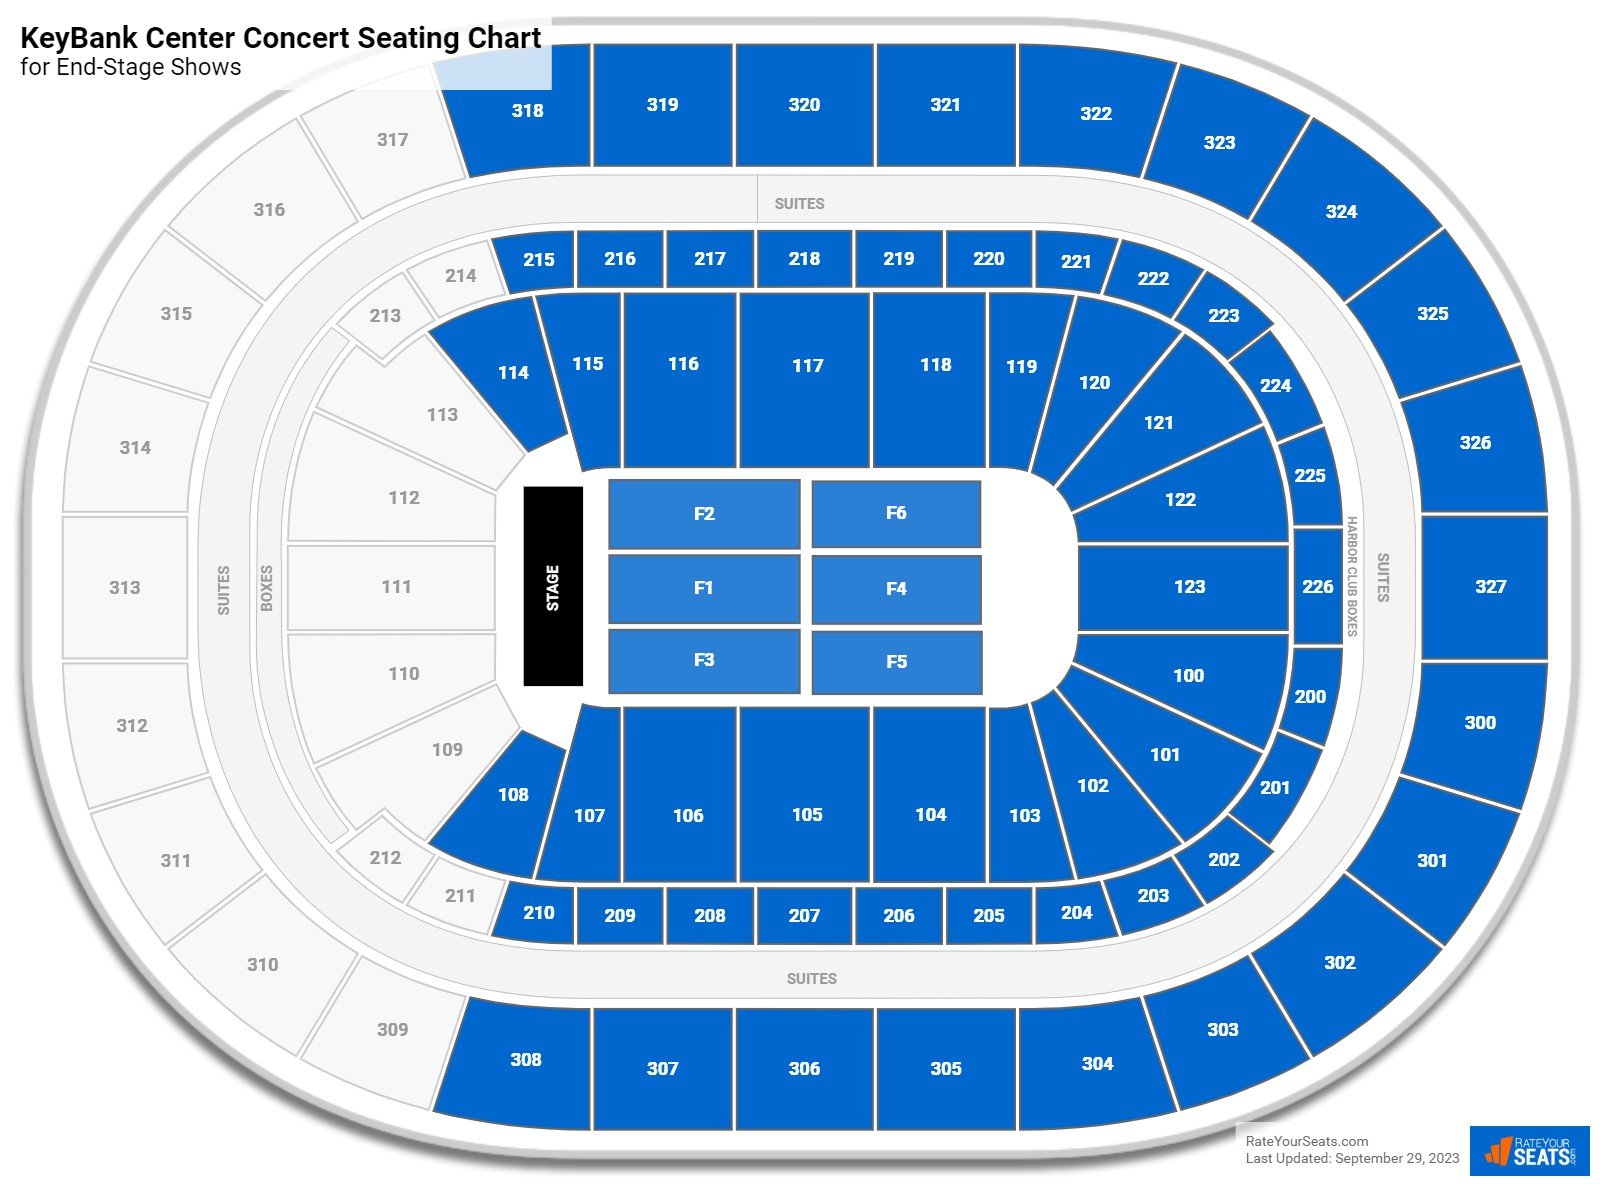 KeyBank Center Concert Seating Chart